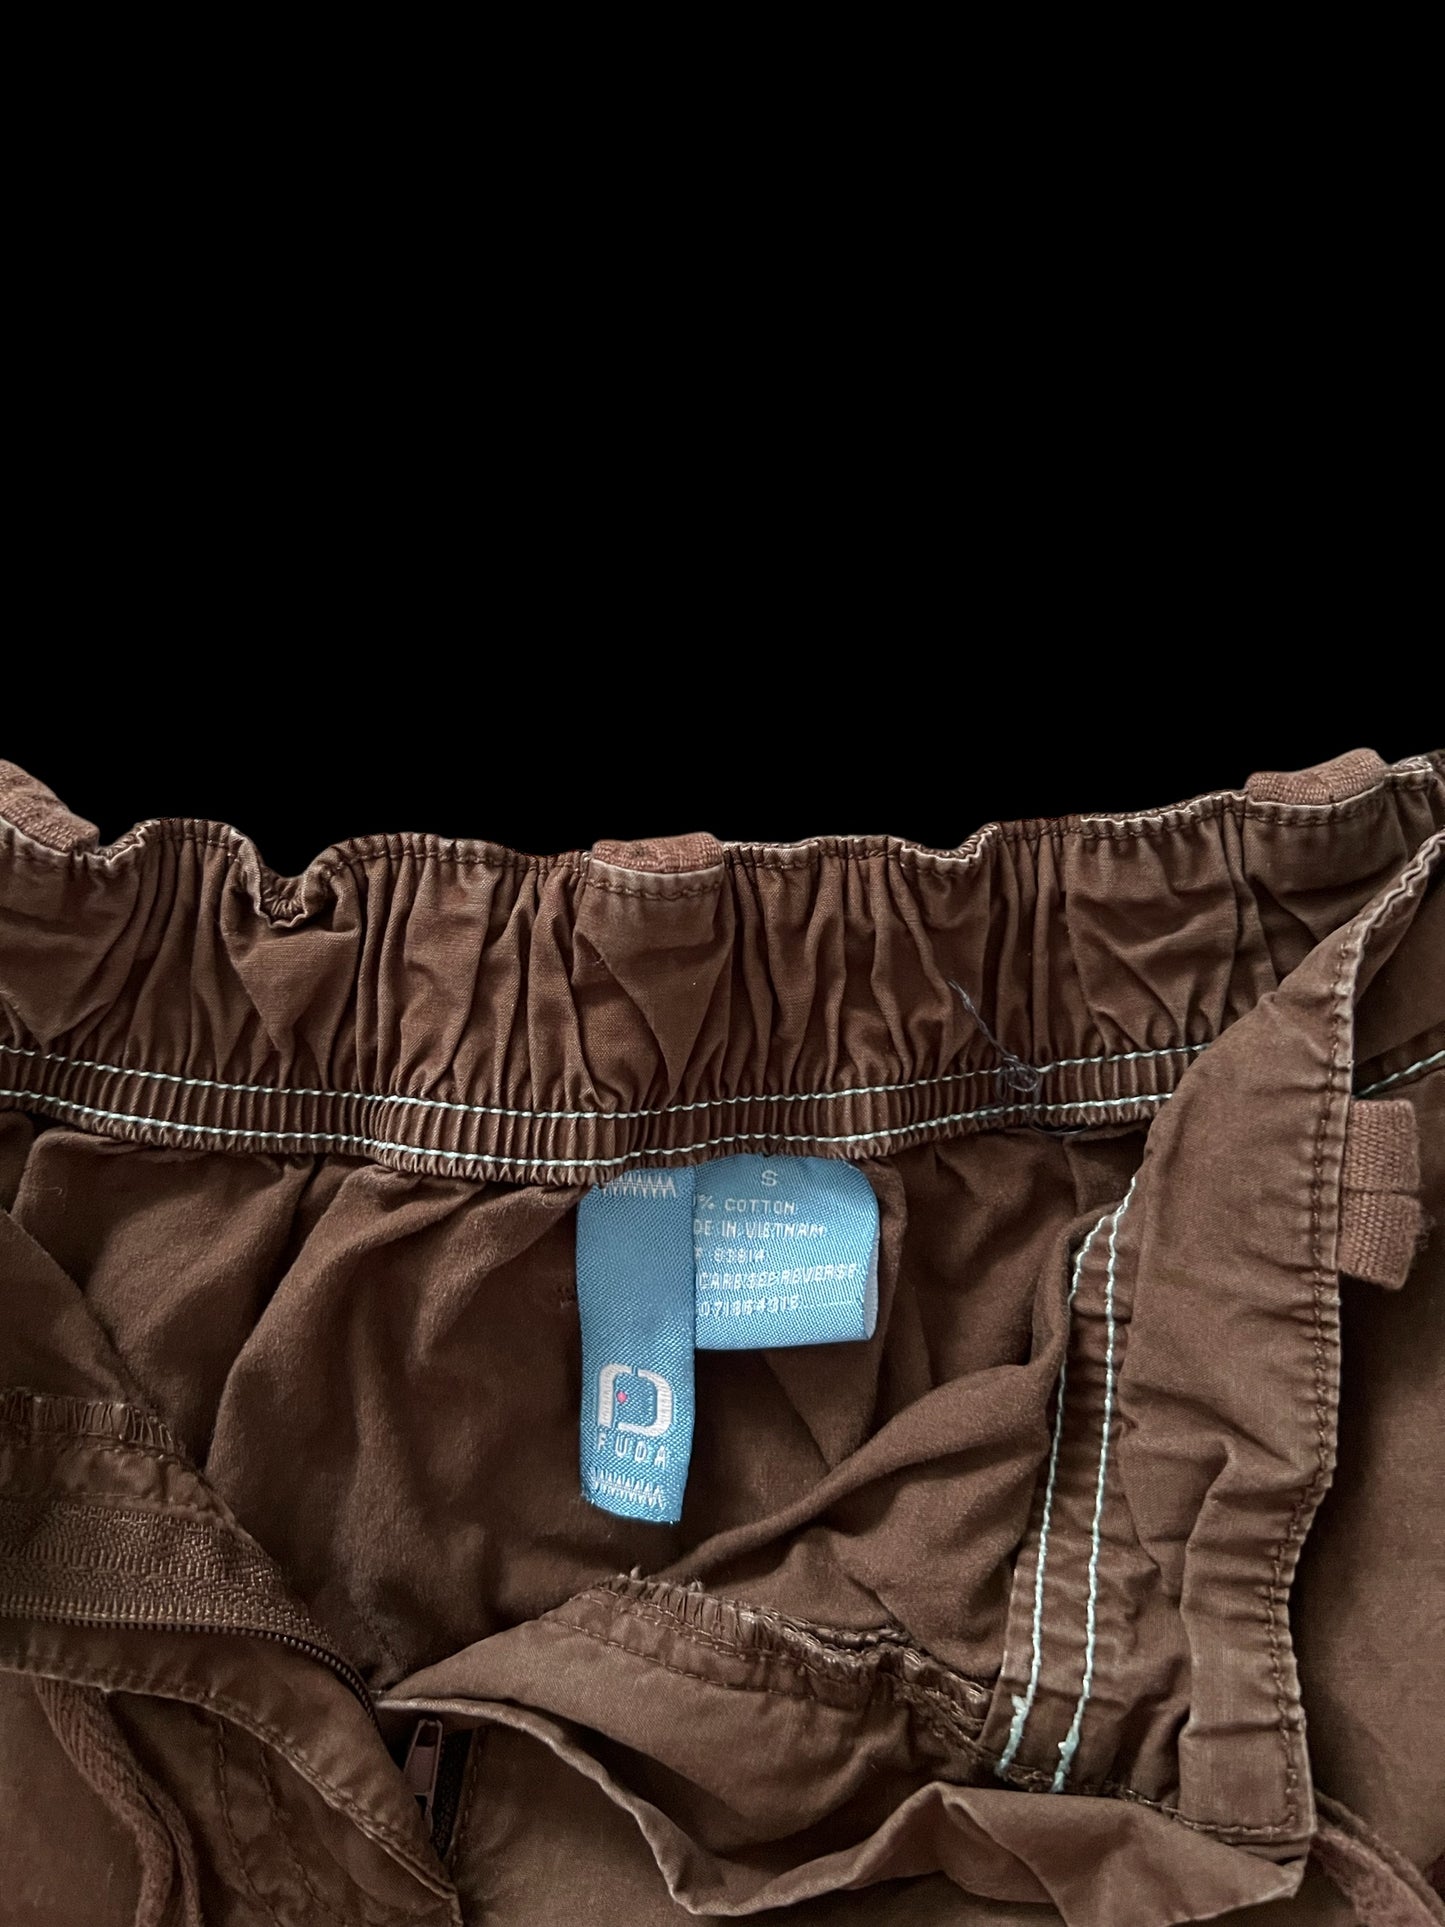 Brown cargo pants